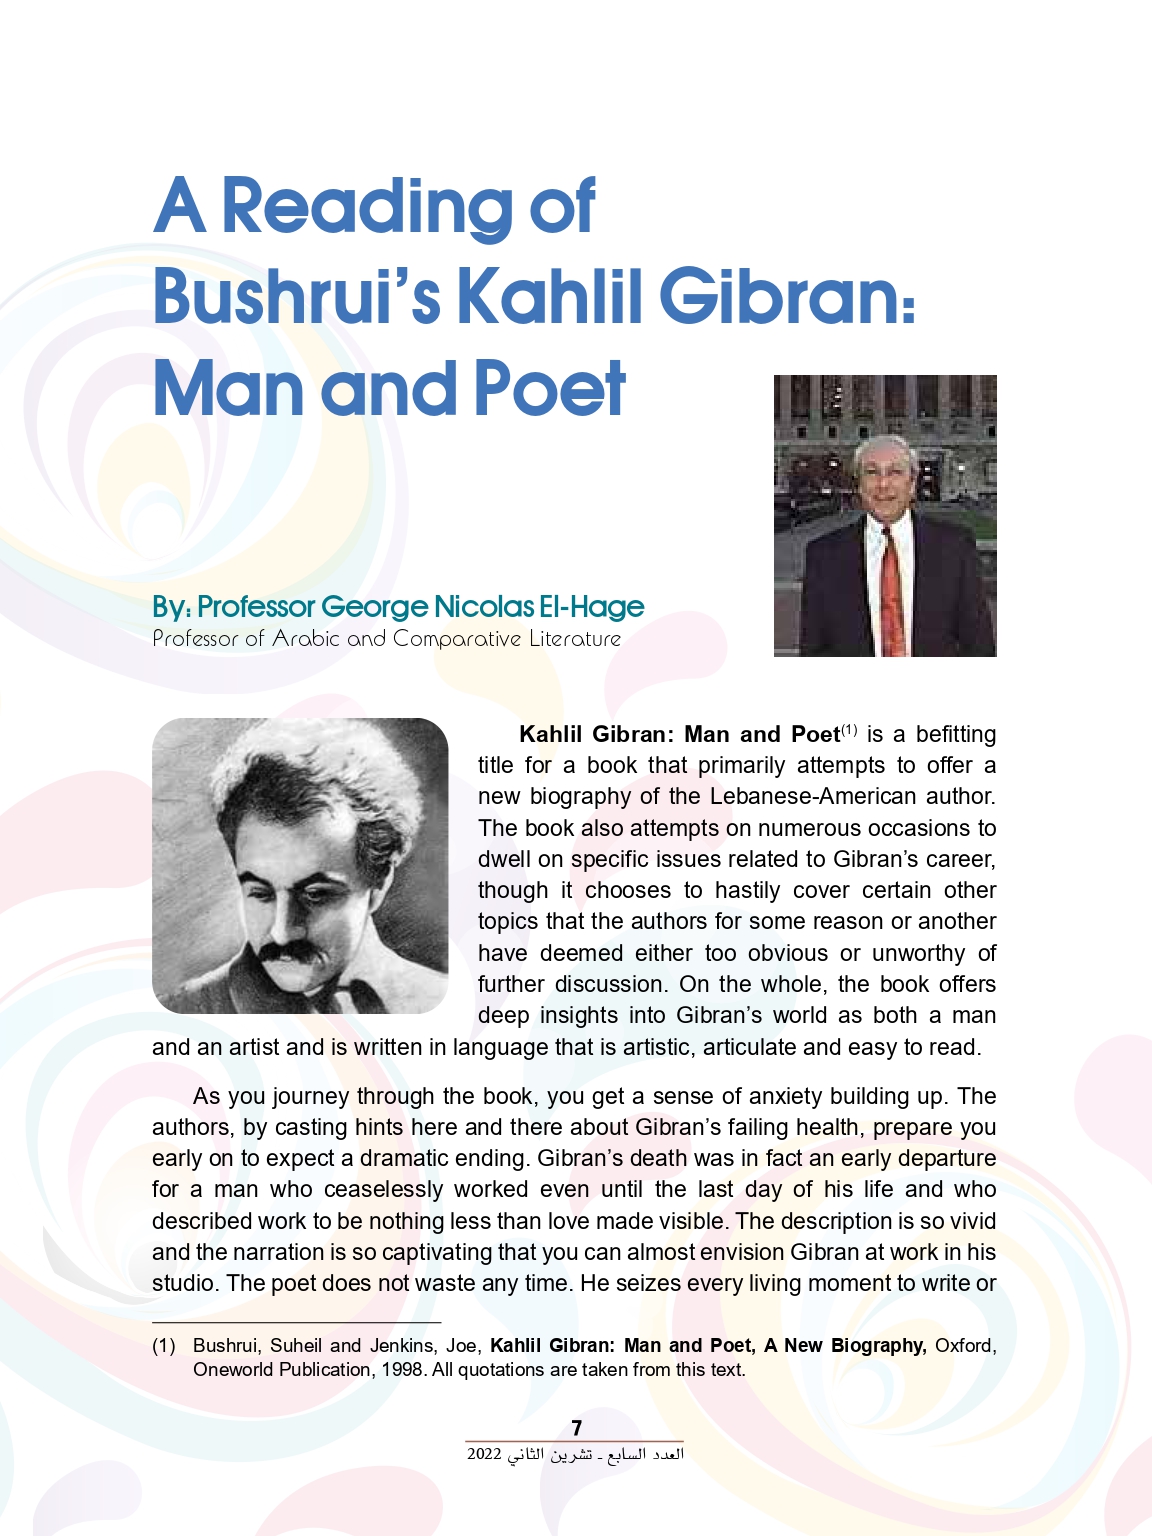 George Nicolas El-Hage, "A Reading of Bushrui’s Kahlil Gibran: Man and Poet", Aqlam, issue 7, November 2022, pp. 7-23.